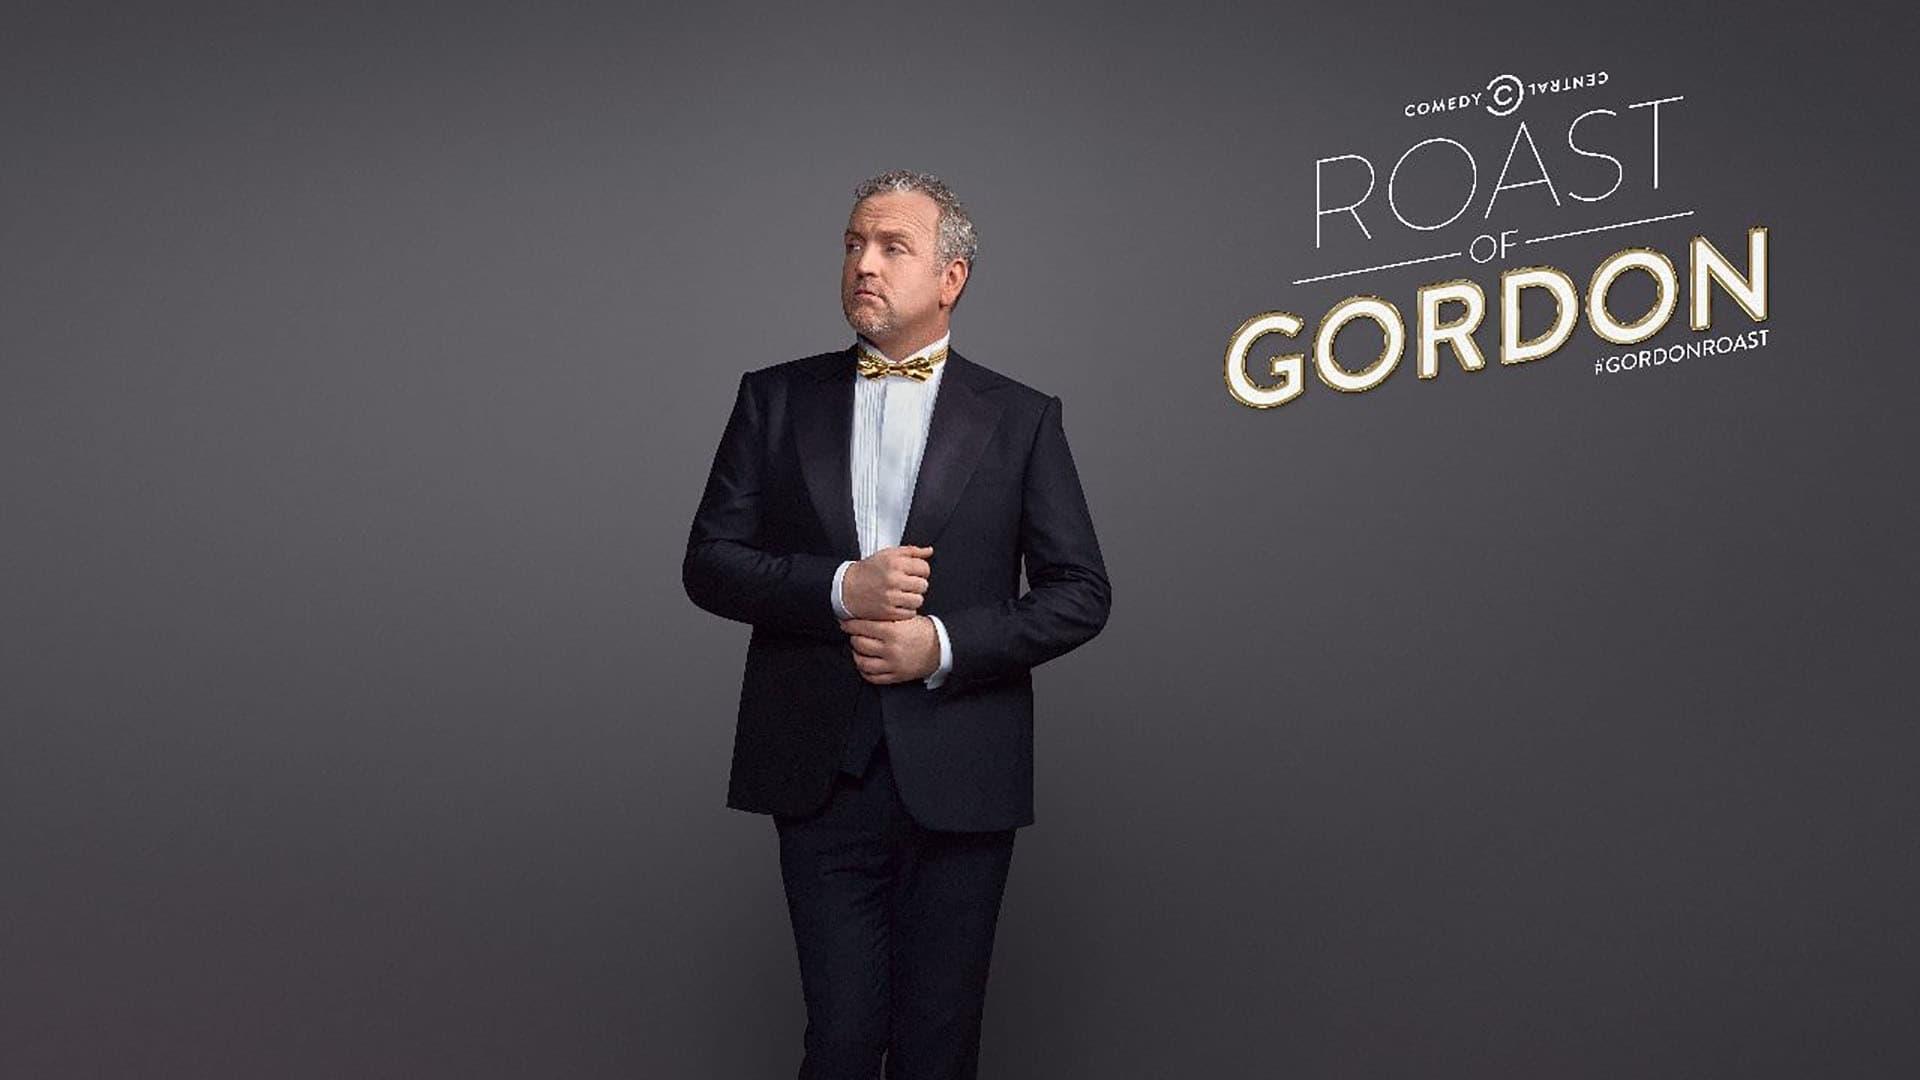 The Roast of Gordon backdrop